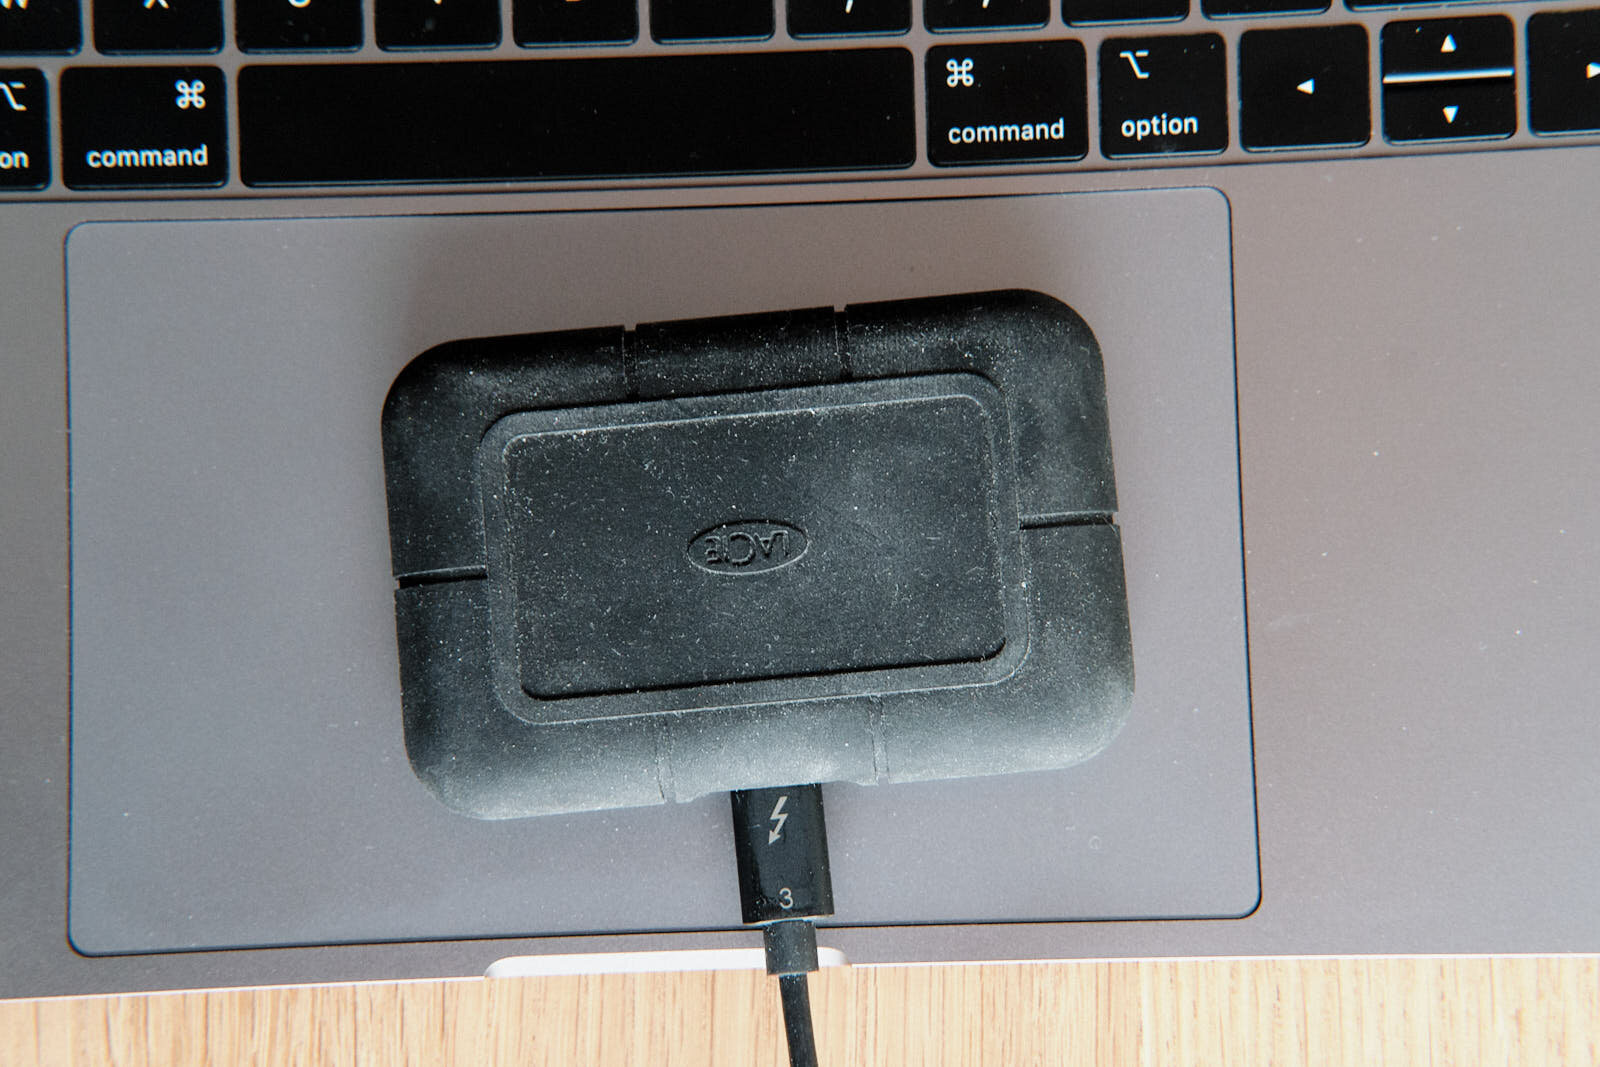 Disque dur portatif USB-C Rugged de LaCie - 2 To - Apple (CA)